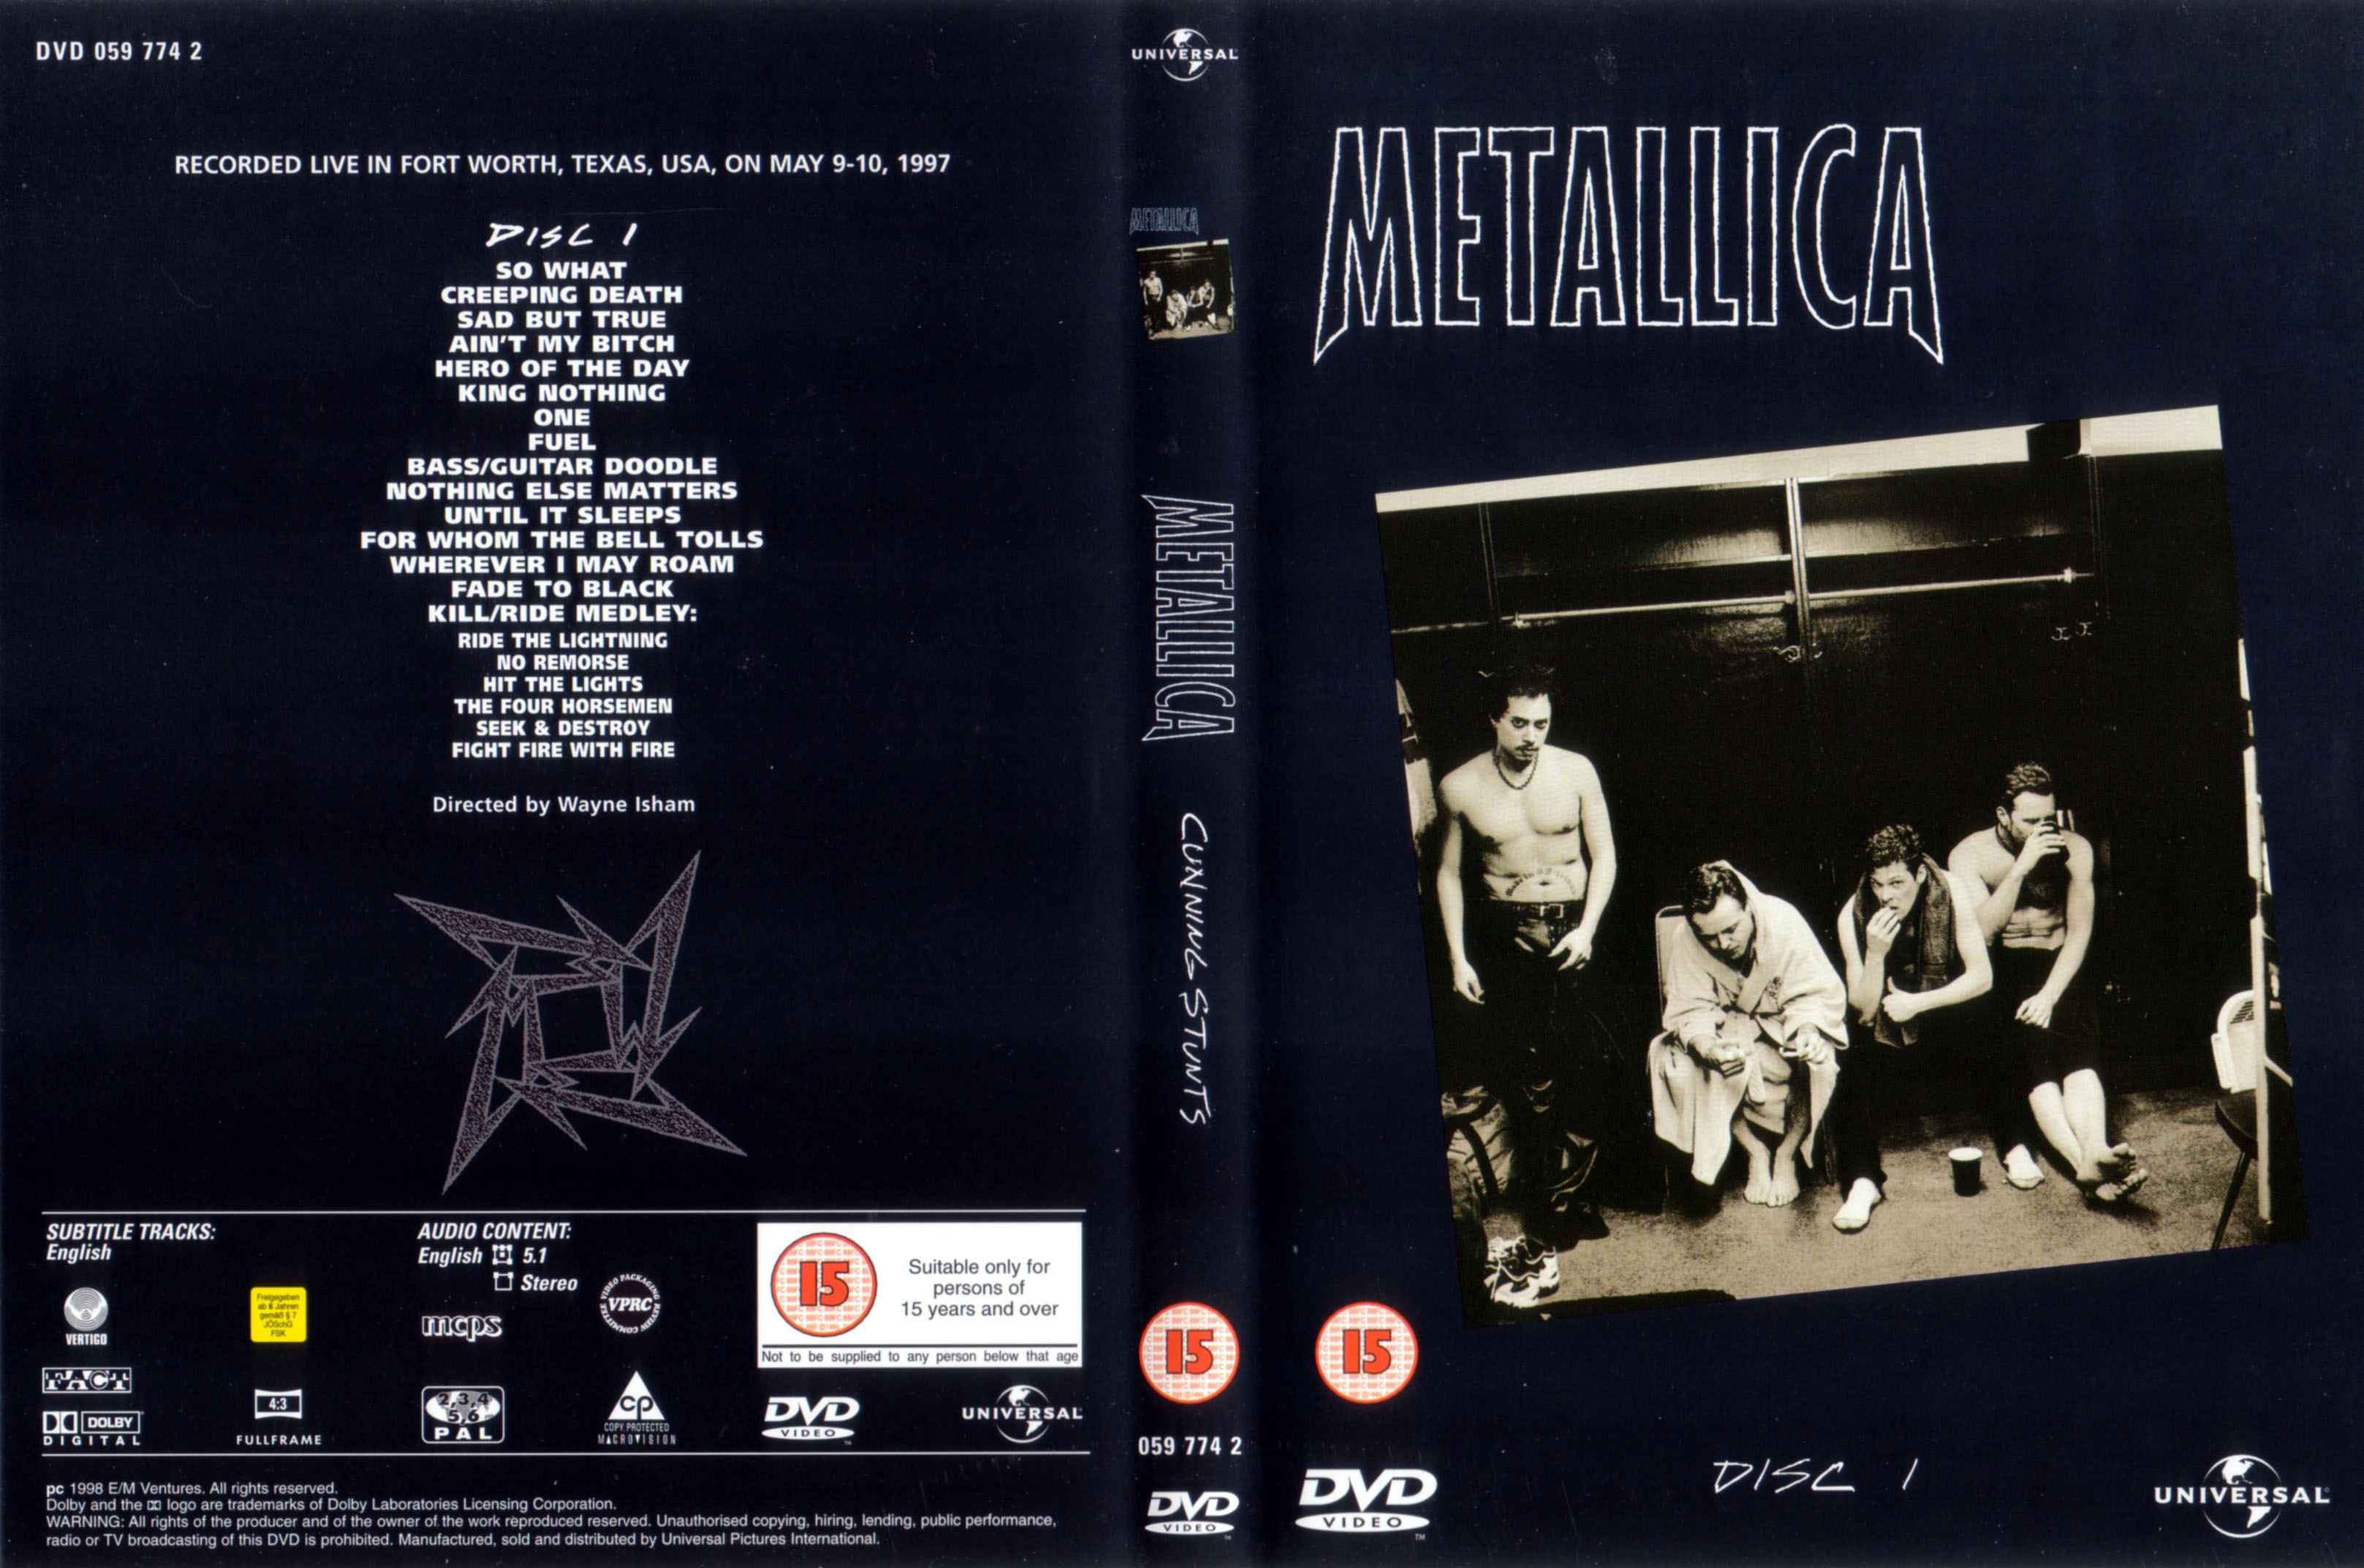 Jaquette DVD Metallica cunning stunts disc 1